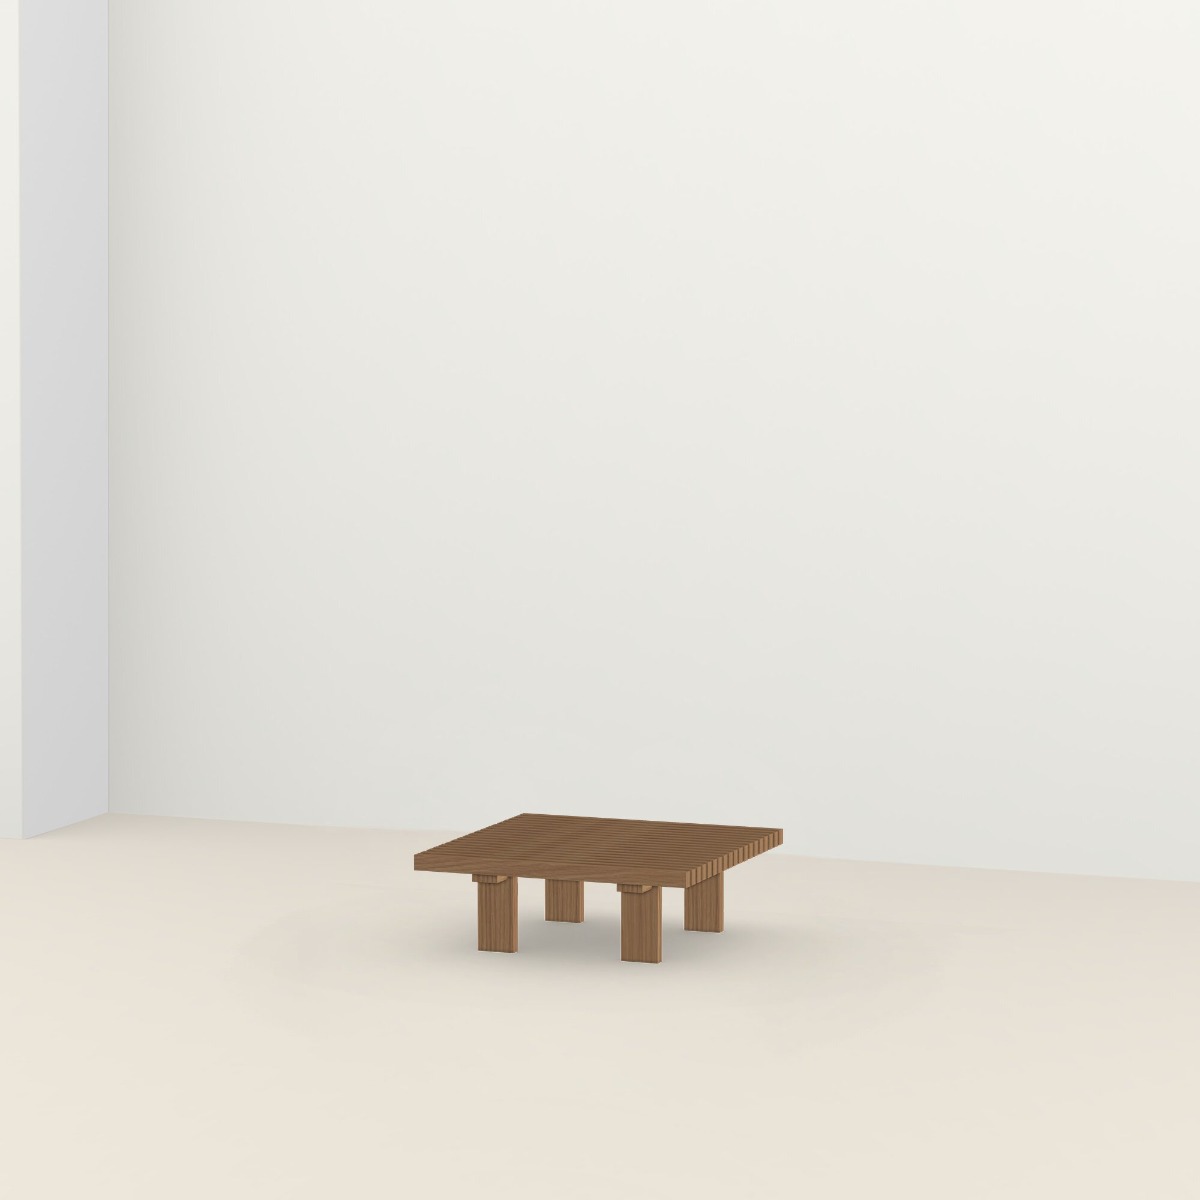 https://www.fundesign.nl/media/catalog/product/o/u/outdoor-coffeee-table.jpg